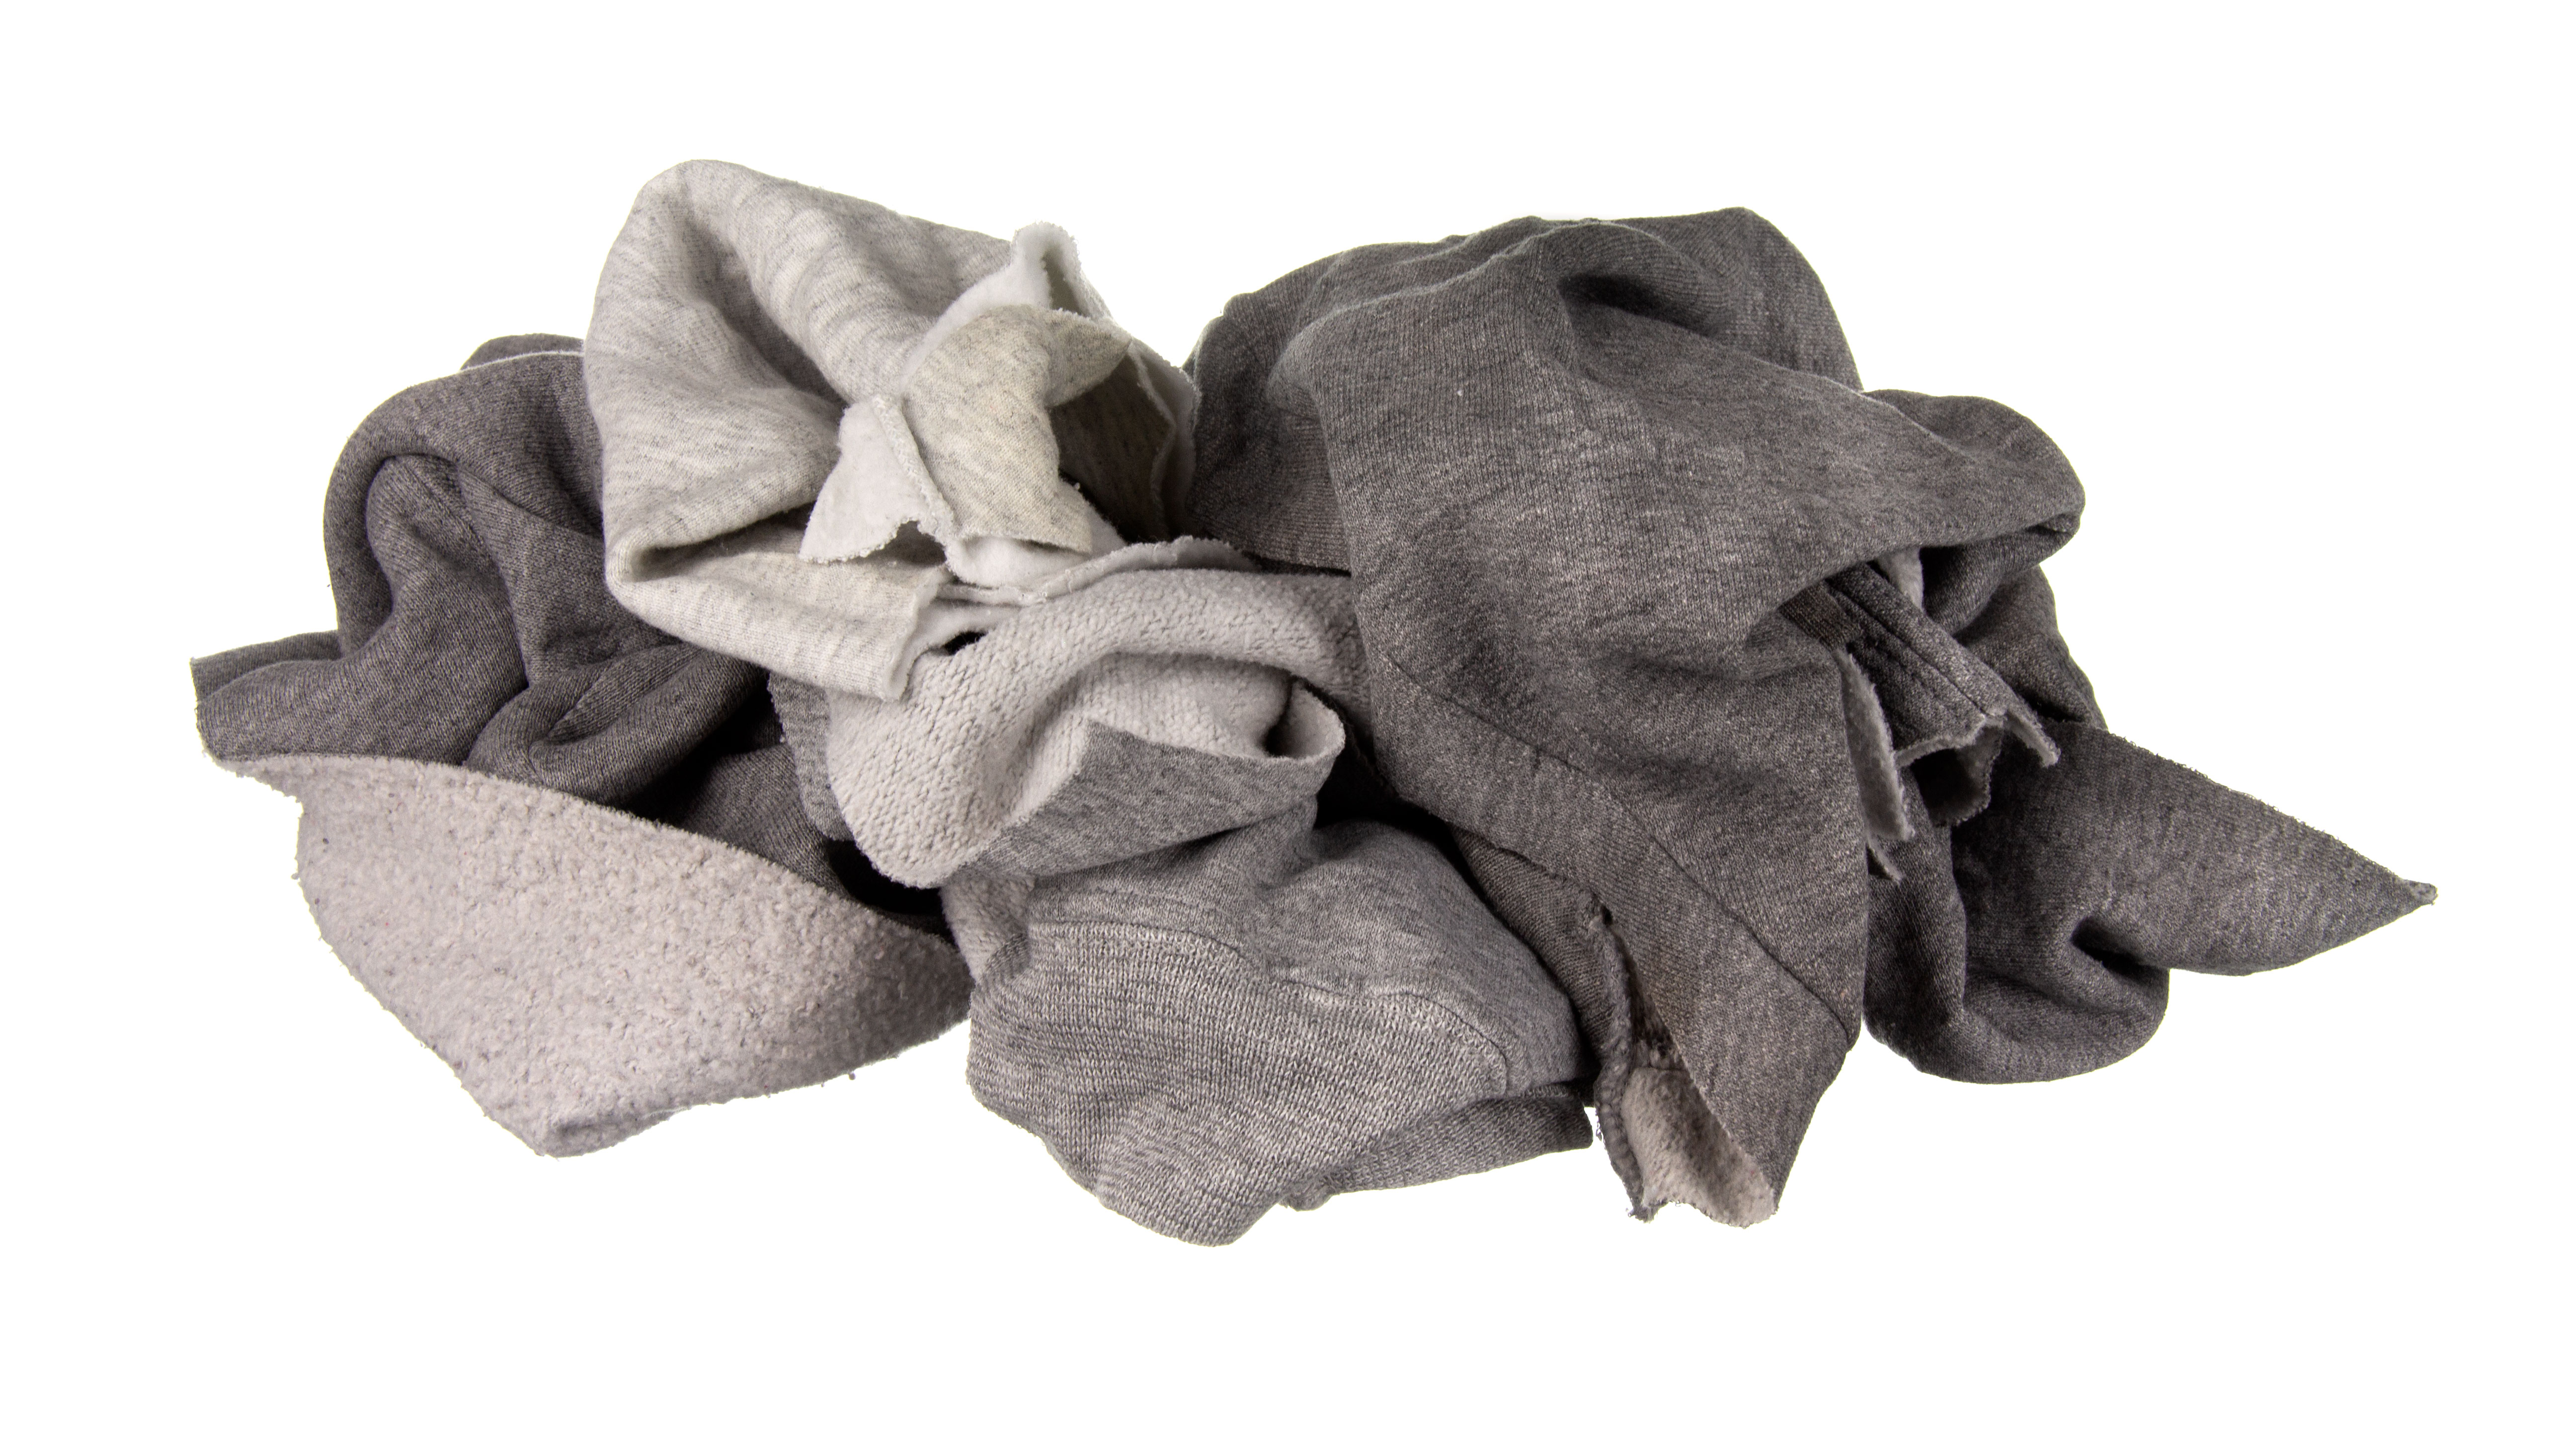 New "PFA" Washed Gray Sweatshirt Rags